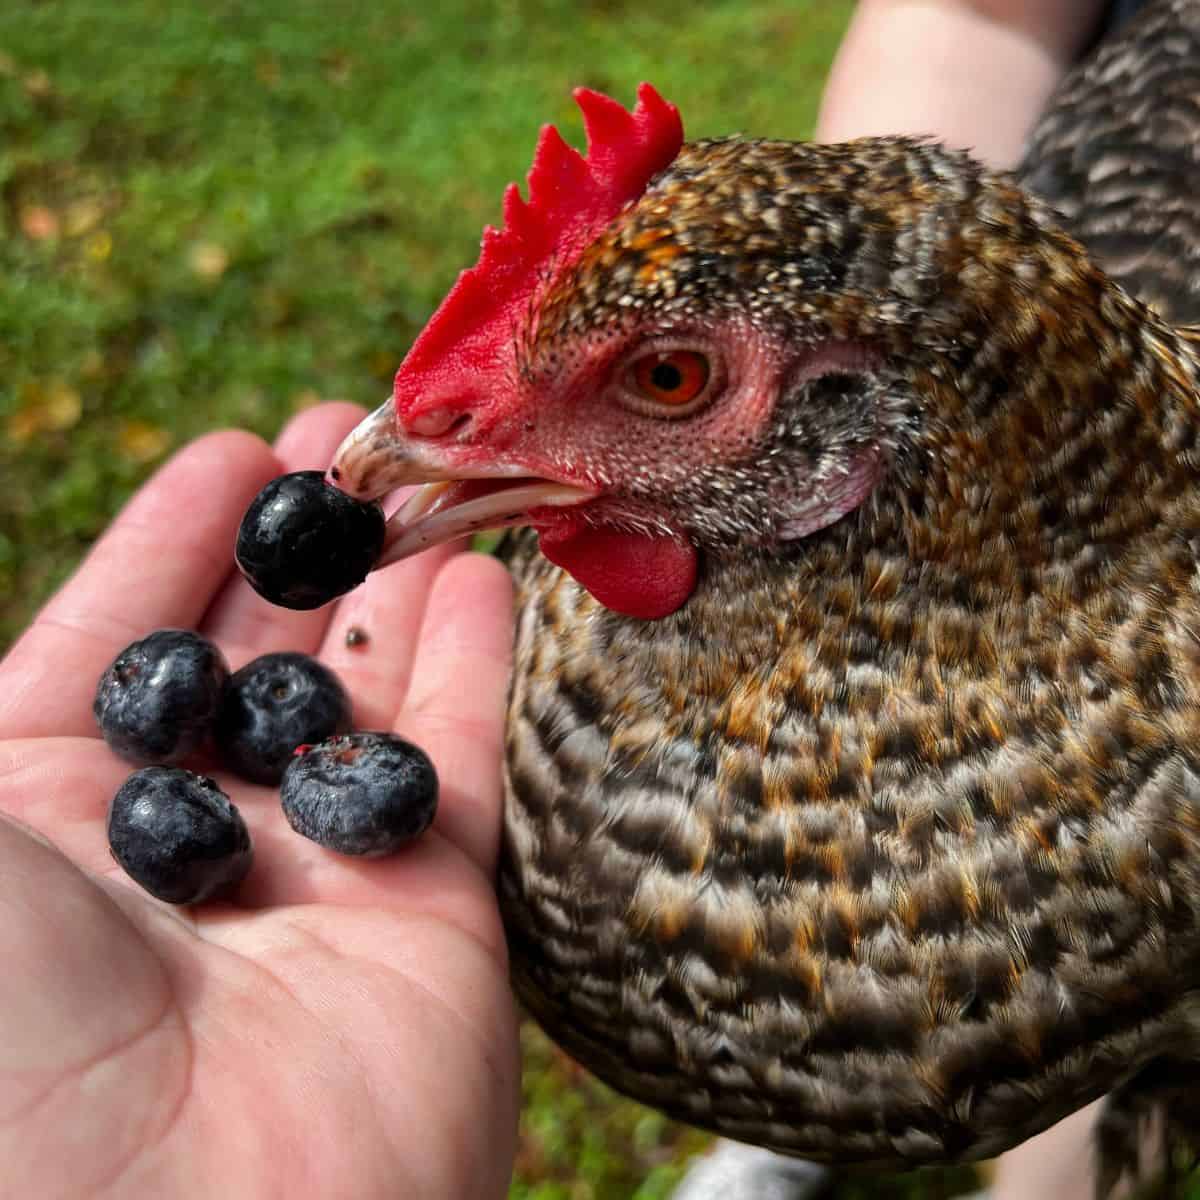 Chicken being held next to handful of blueberries.